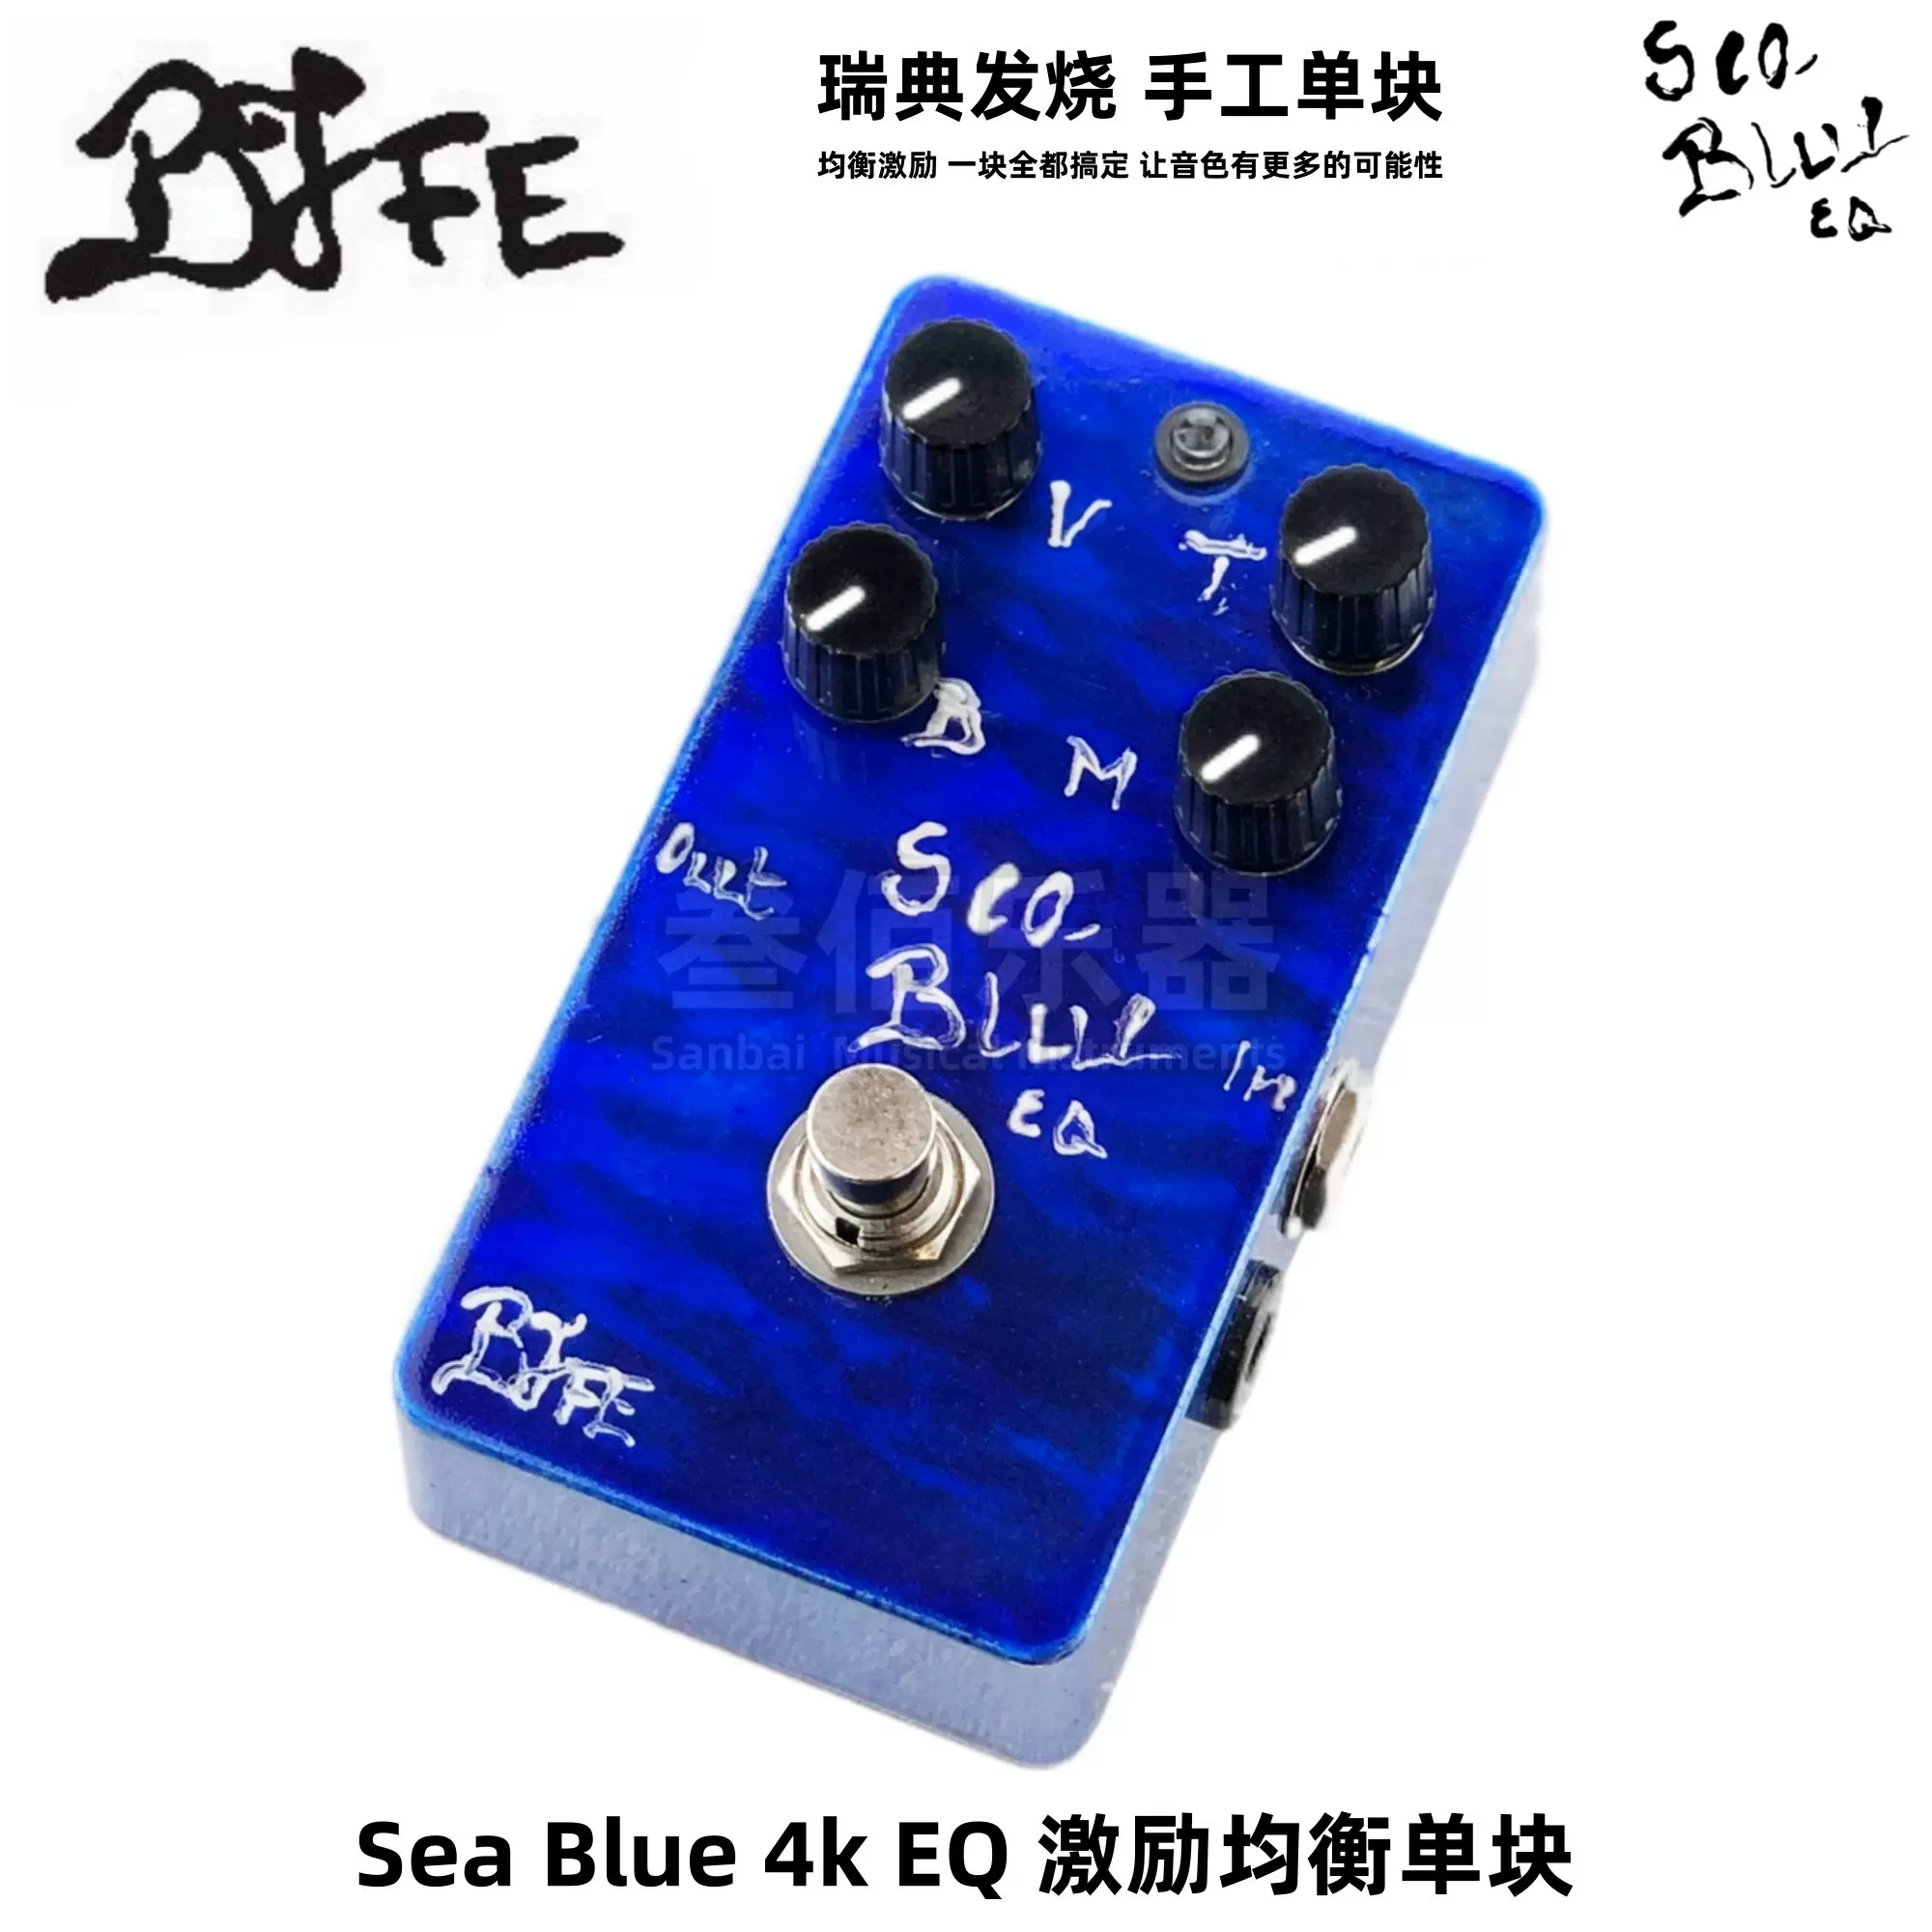 BJFE】Sea Blue EQ-